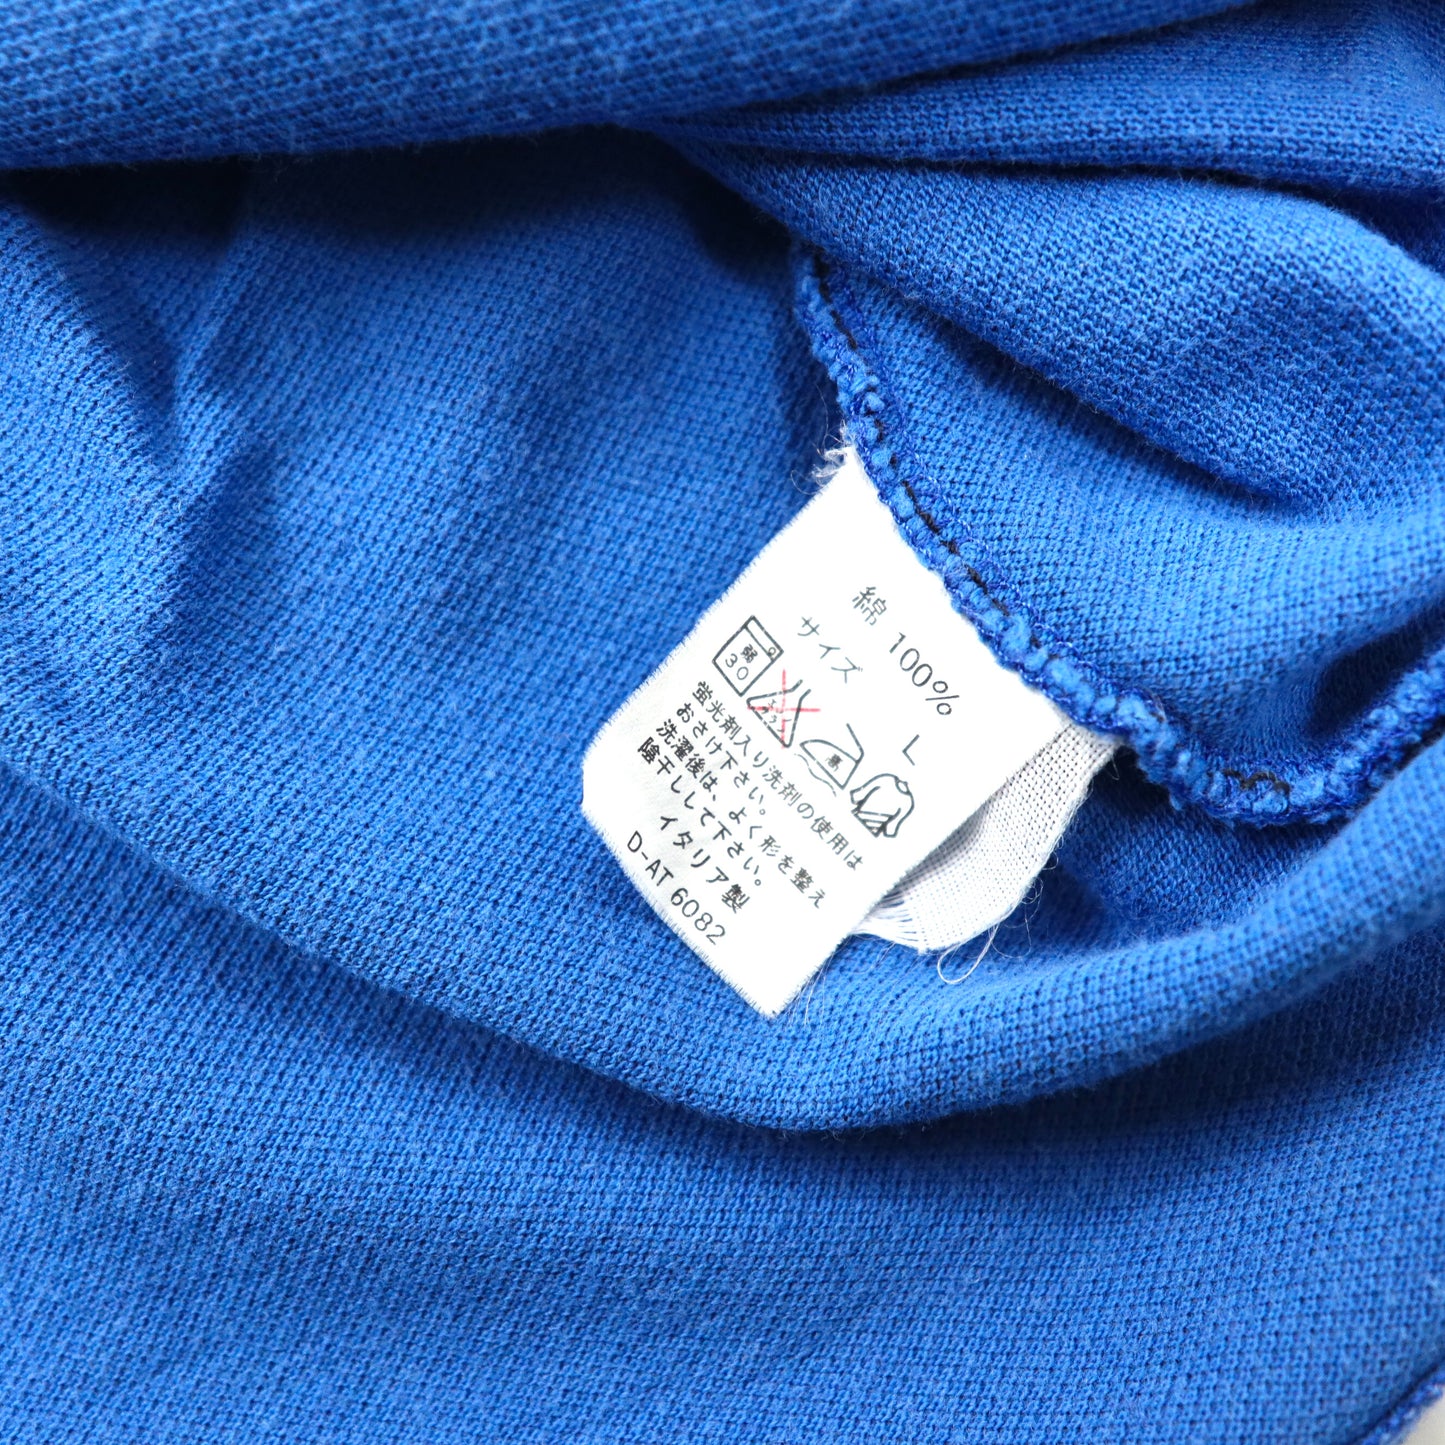 Christian Dior MONSIEUR 長袖ポロシャツ 50 ブルー コットン オールド イタリア製